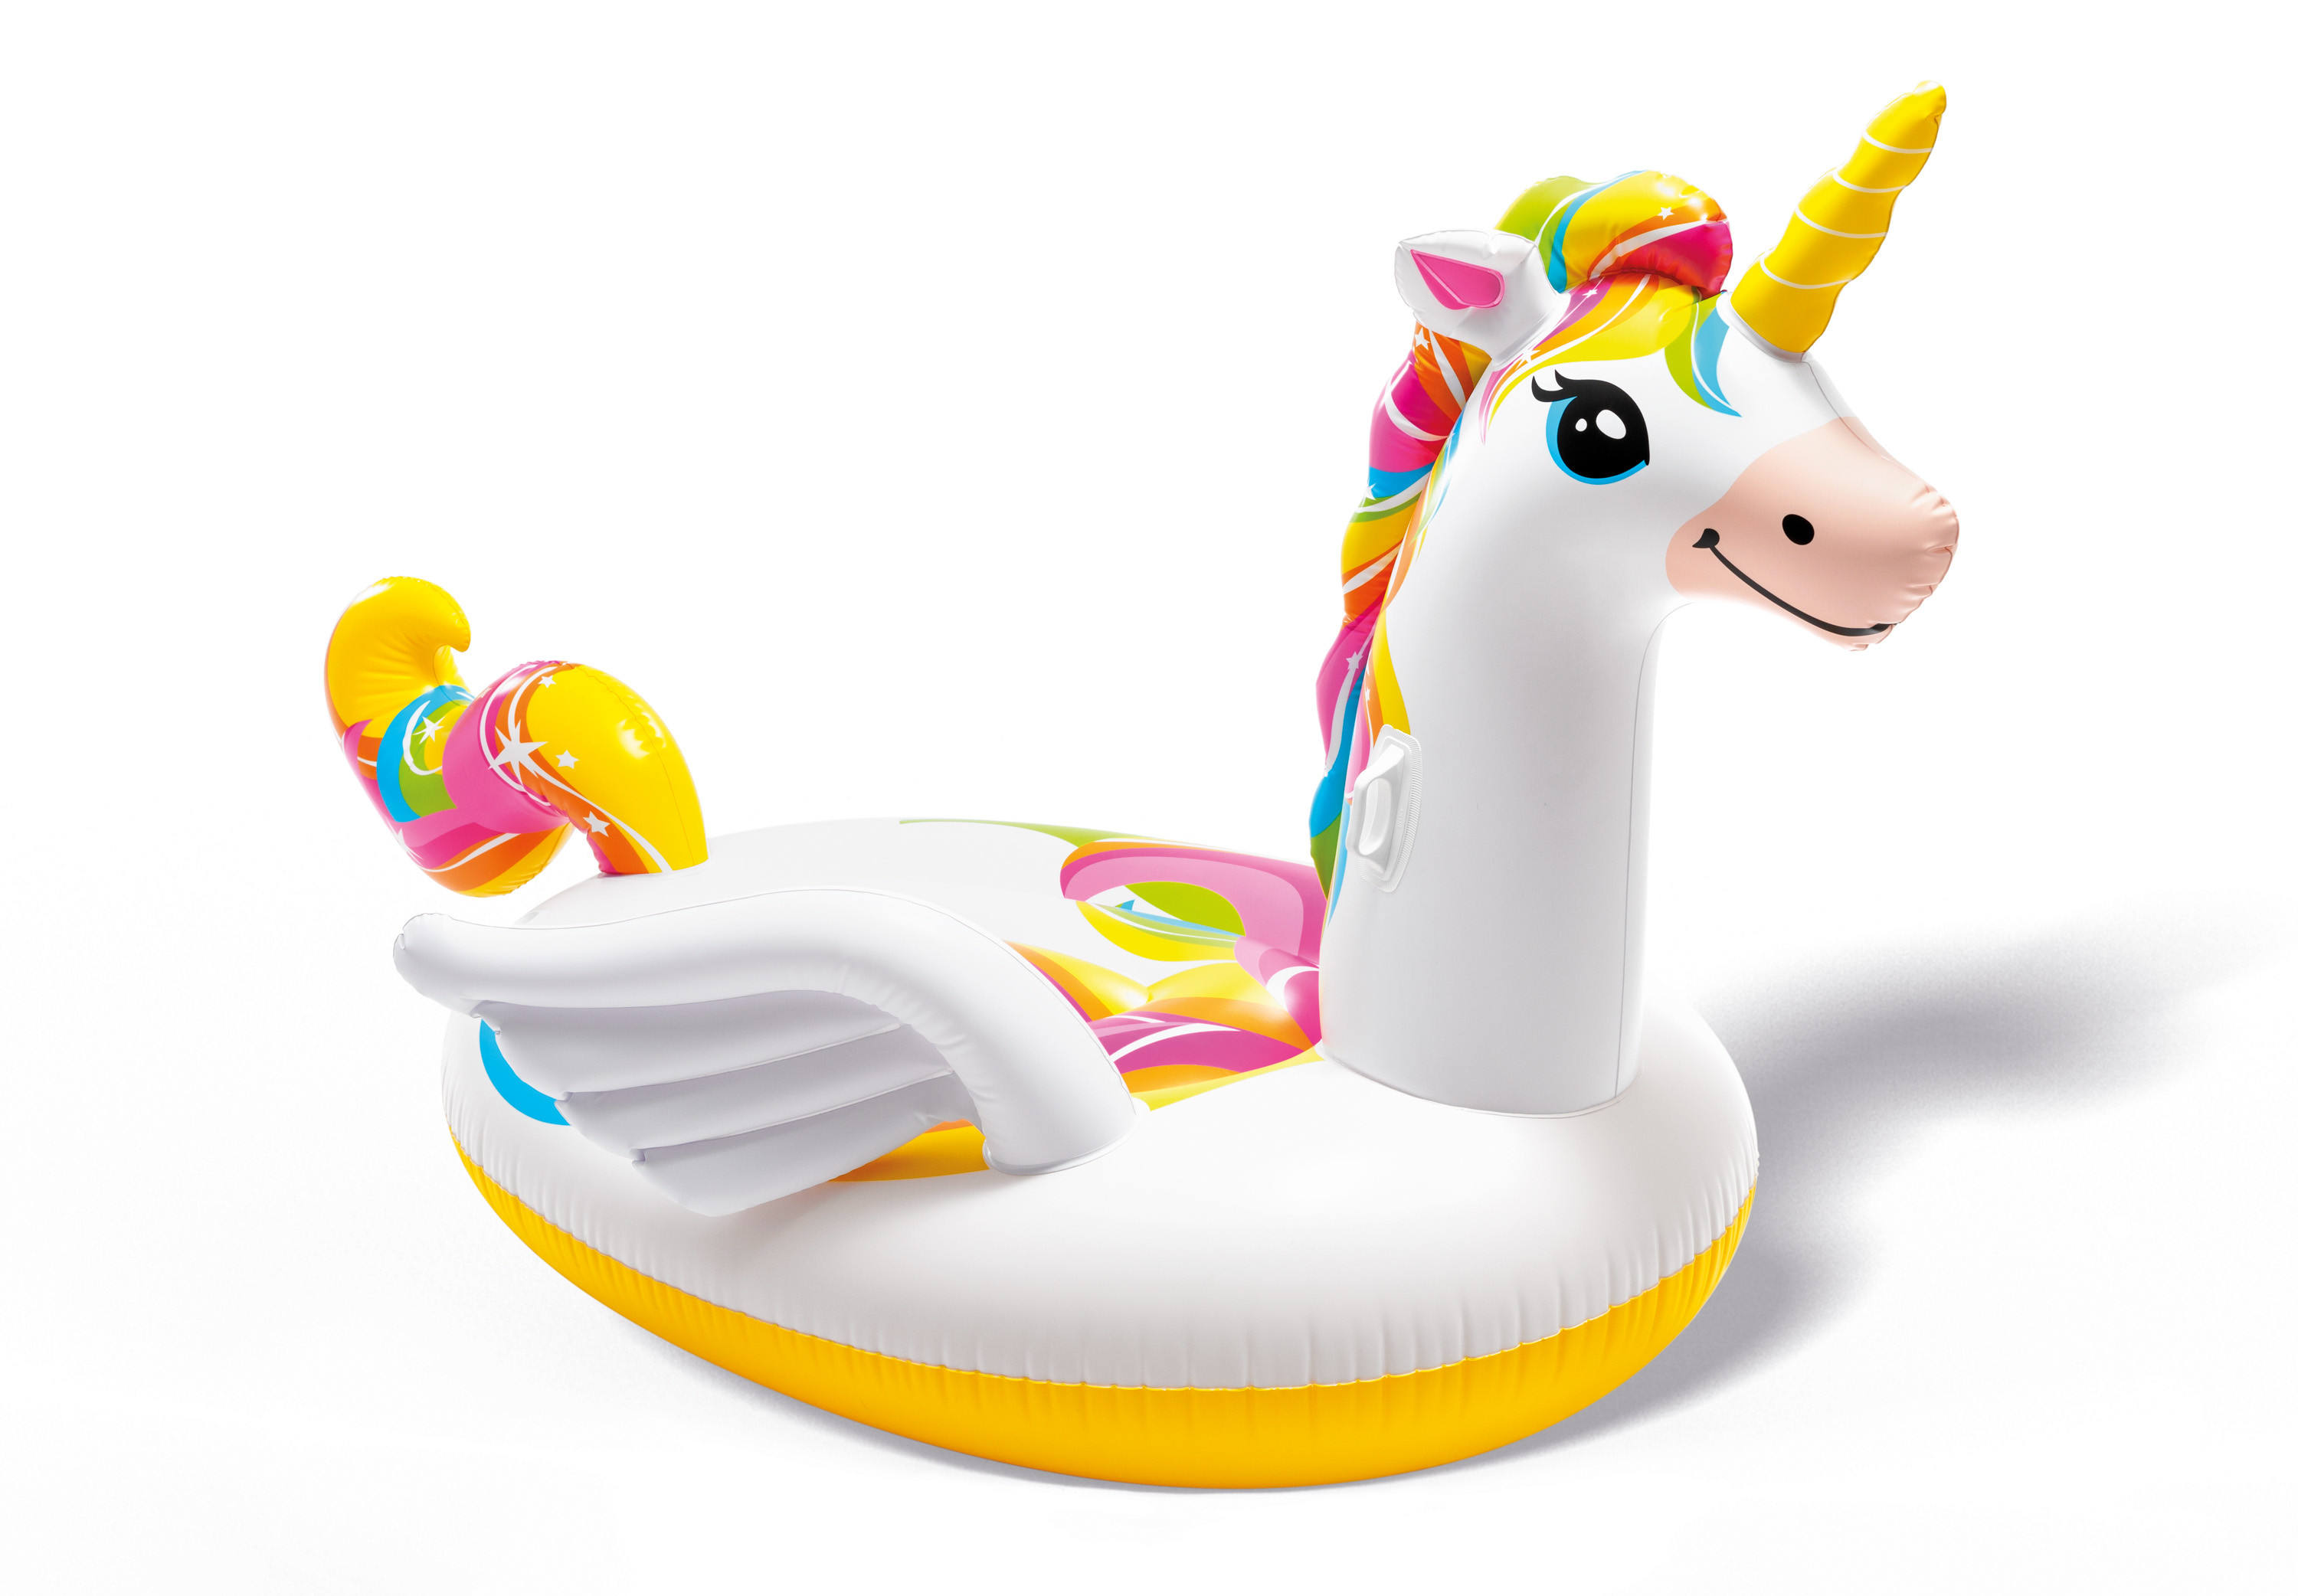 the inflatable unicorn